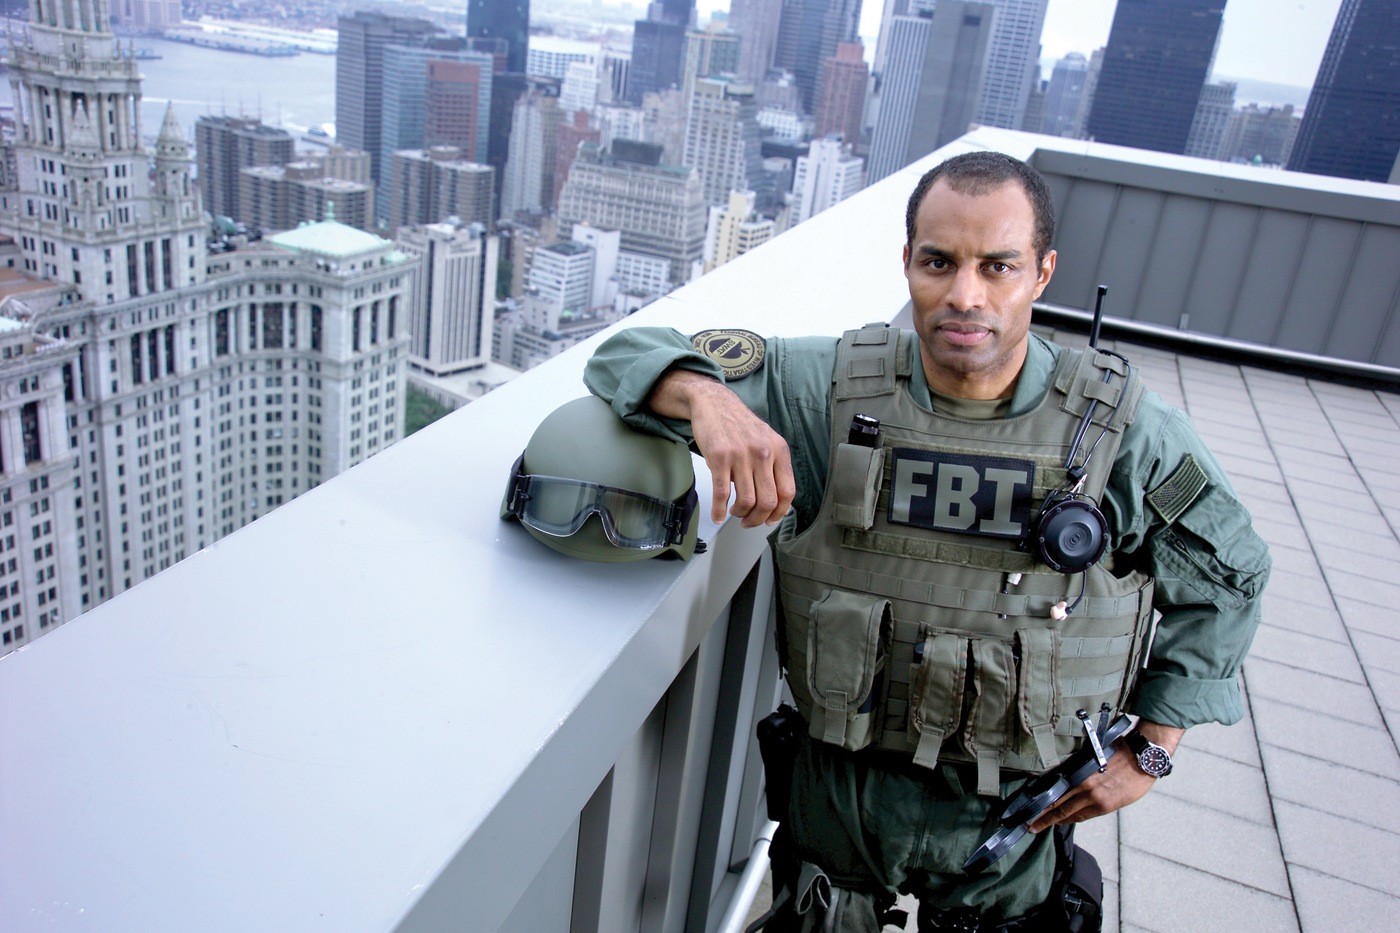 FBI SWAT, New York City rooftop.